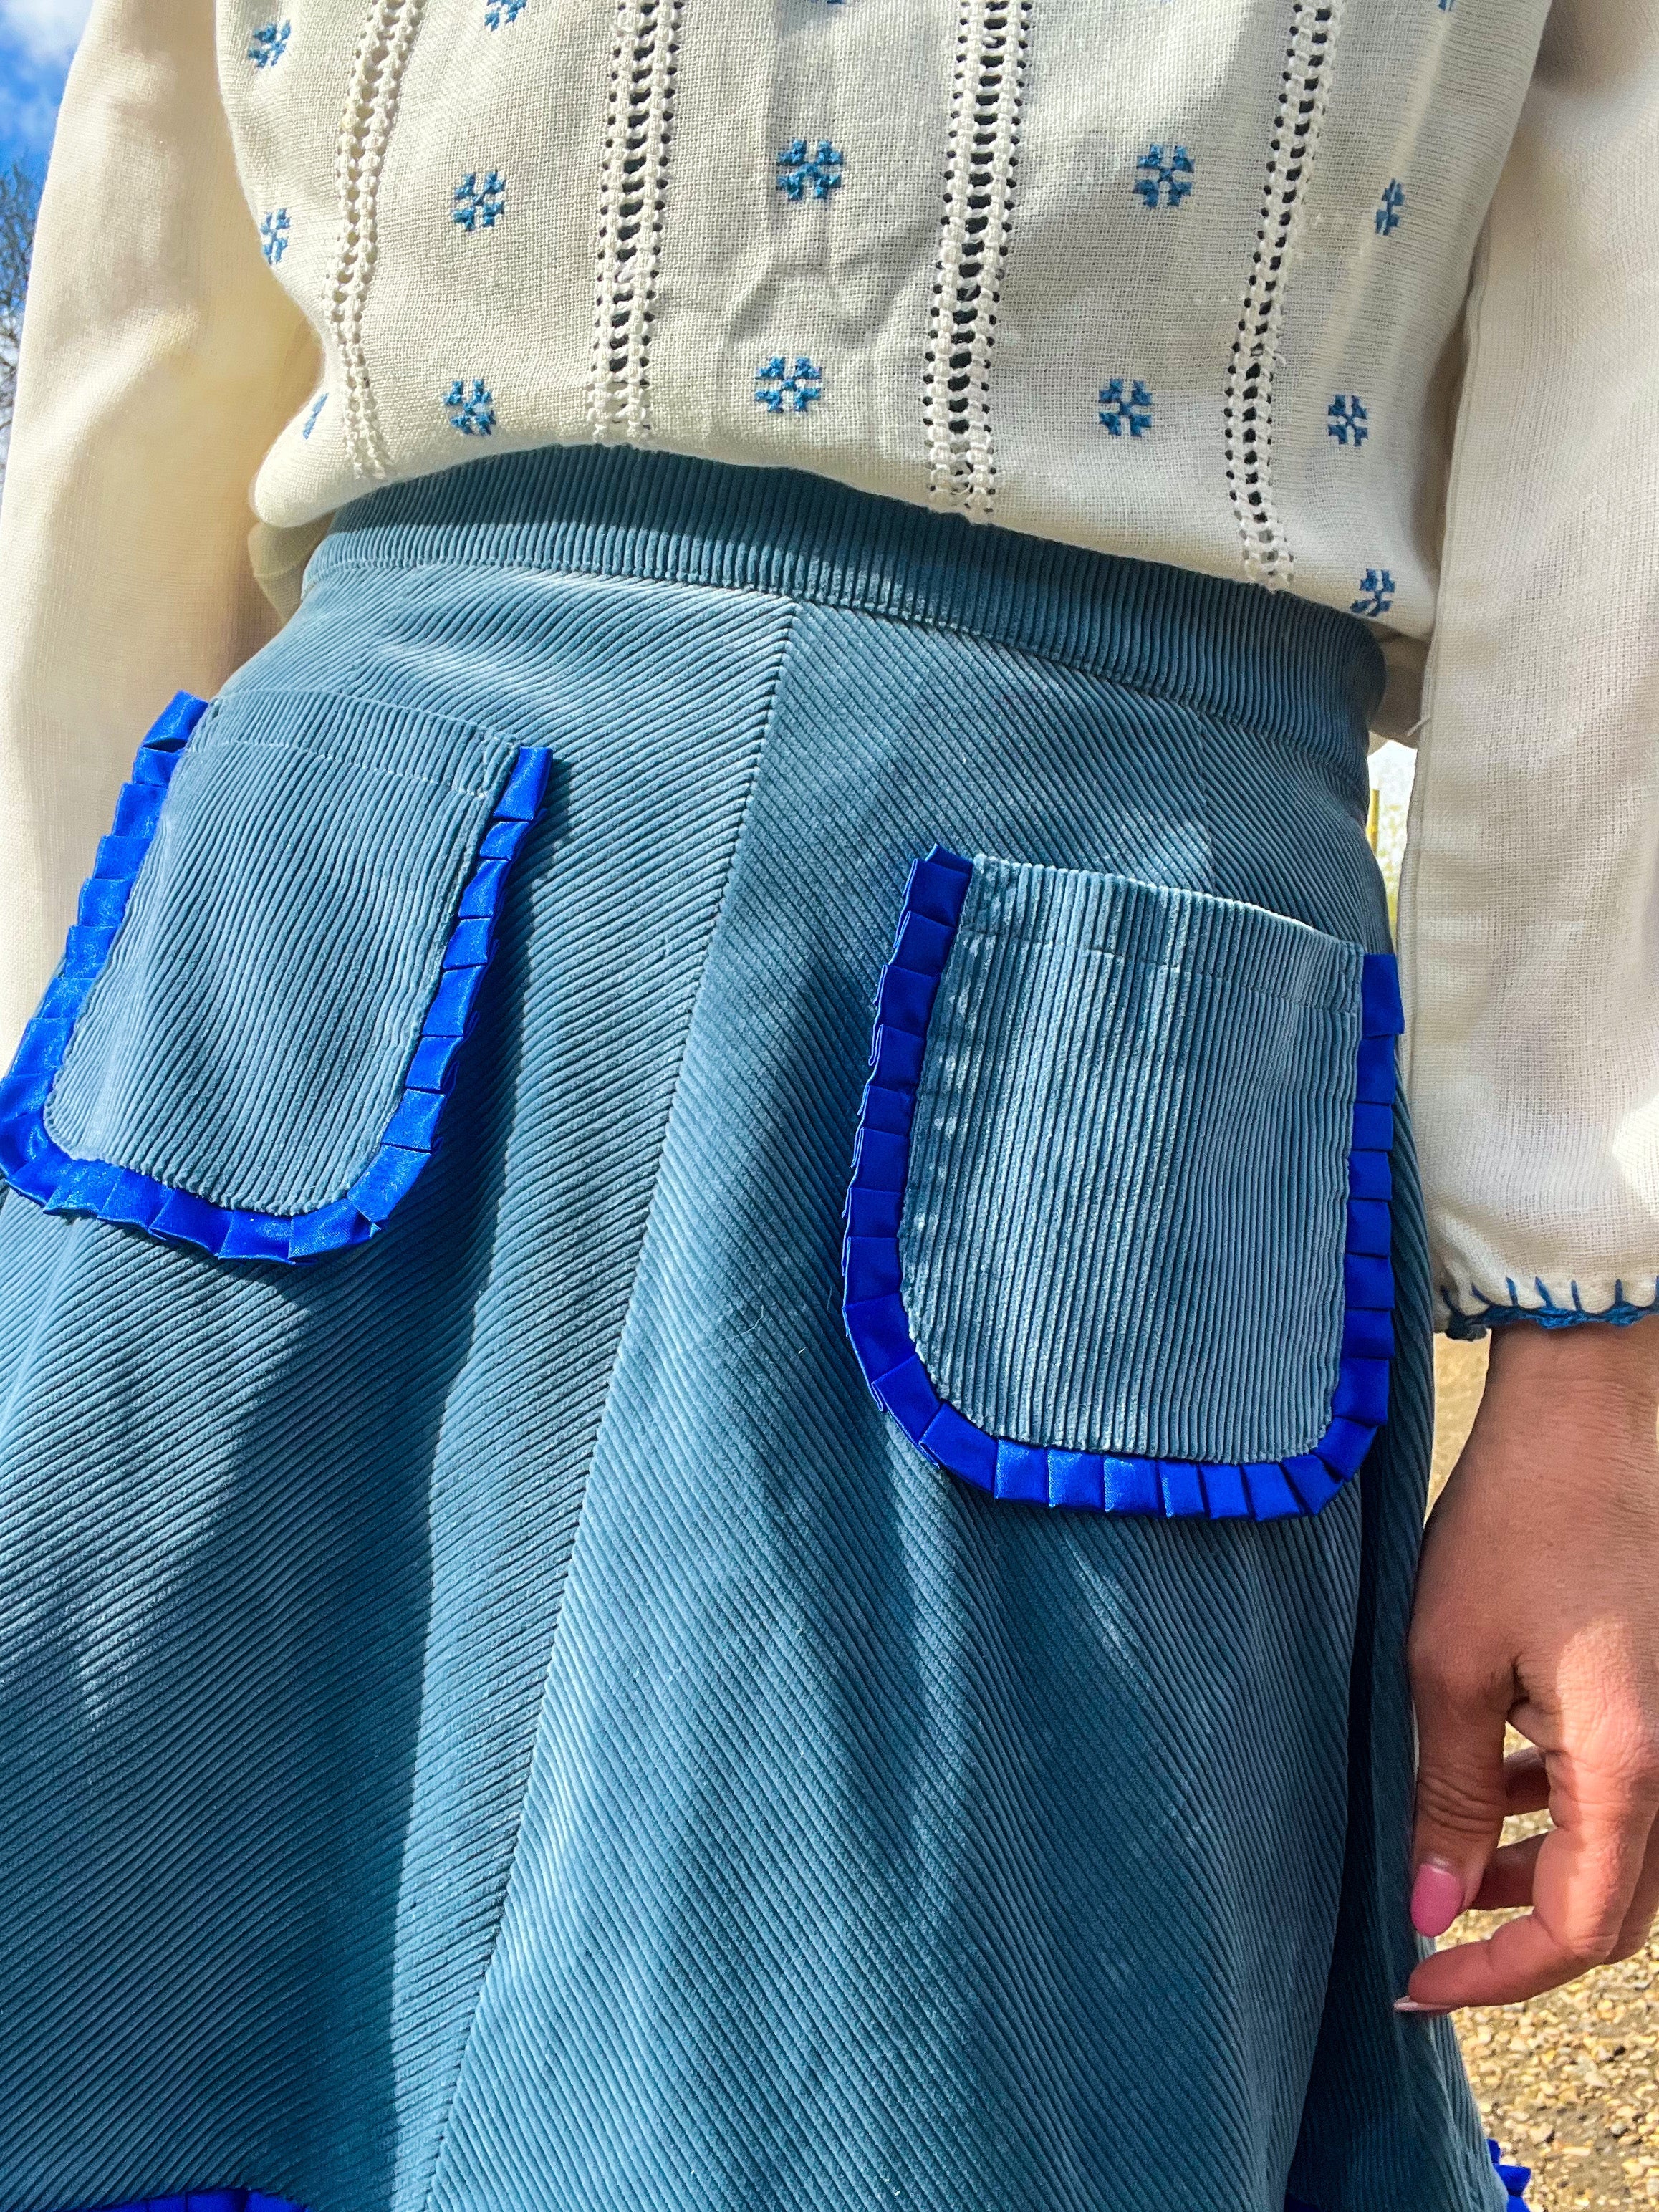 The ‘Bluebell’ Skirt size 14